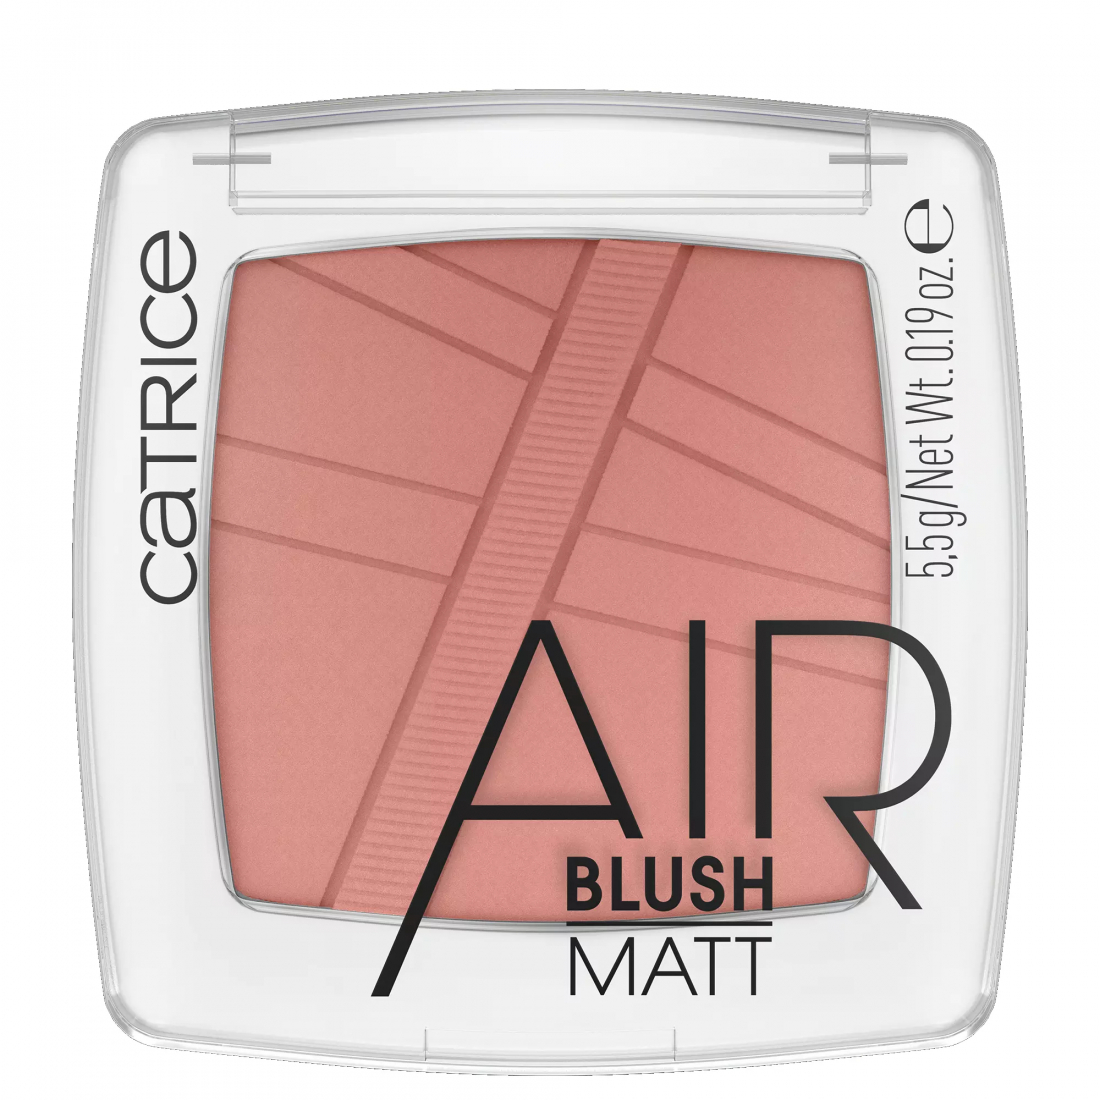 Blush 'Airblush Glow Matte' - 130 Spice Space 5.5 g